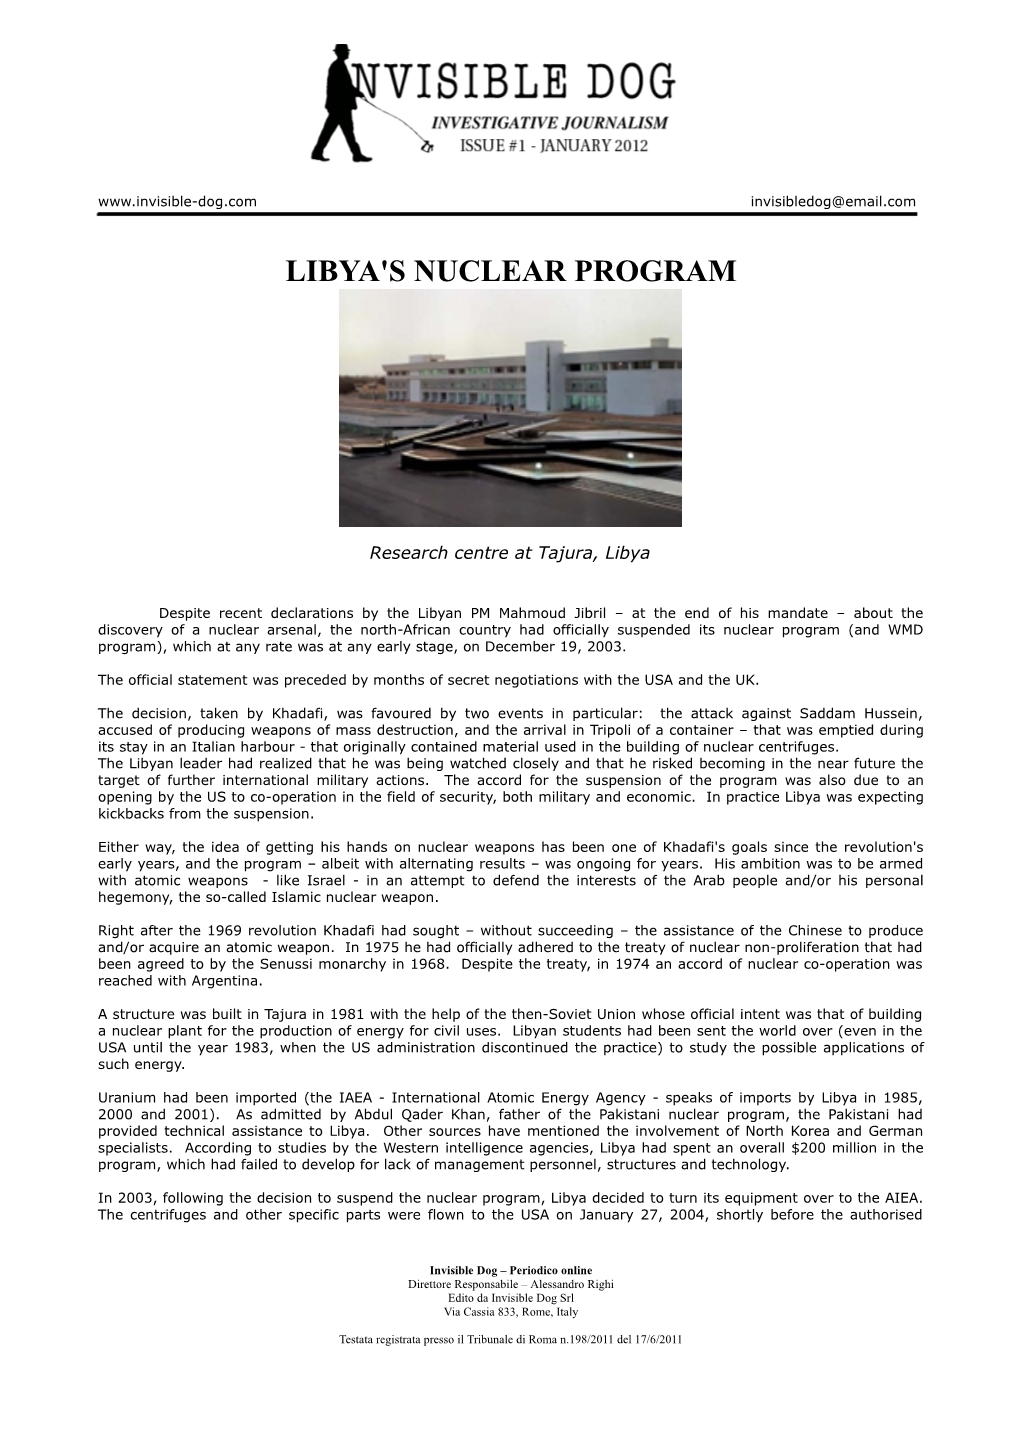 Libya's Nuclear Program